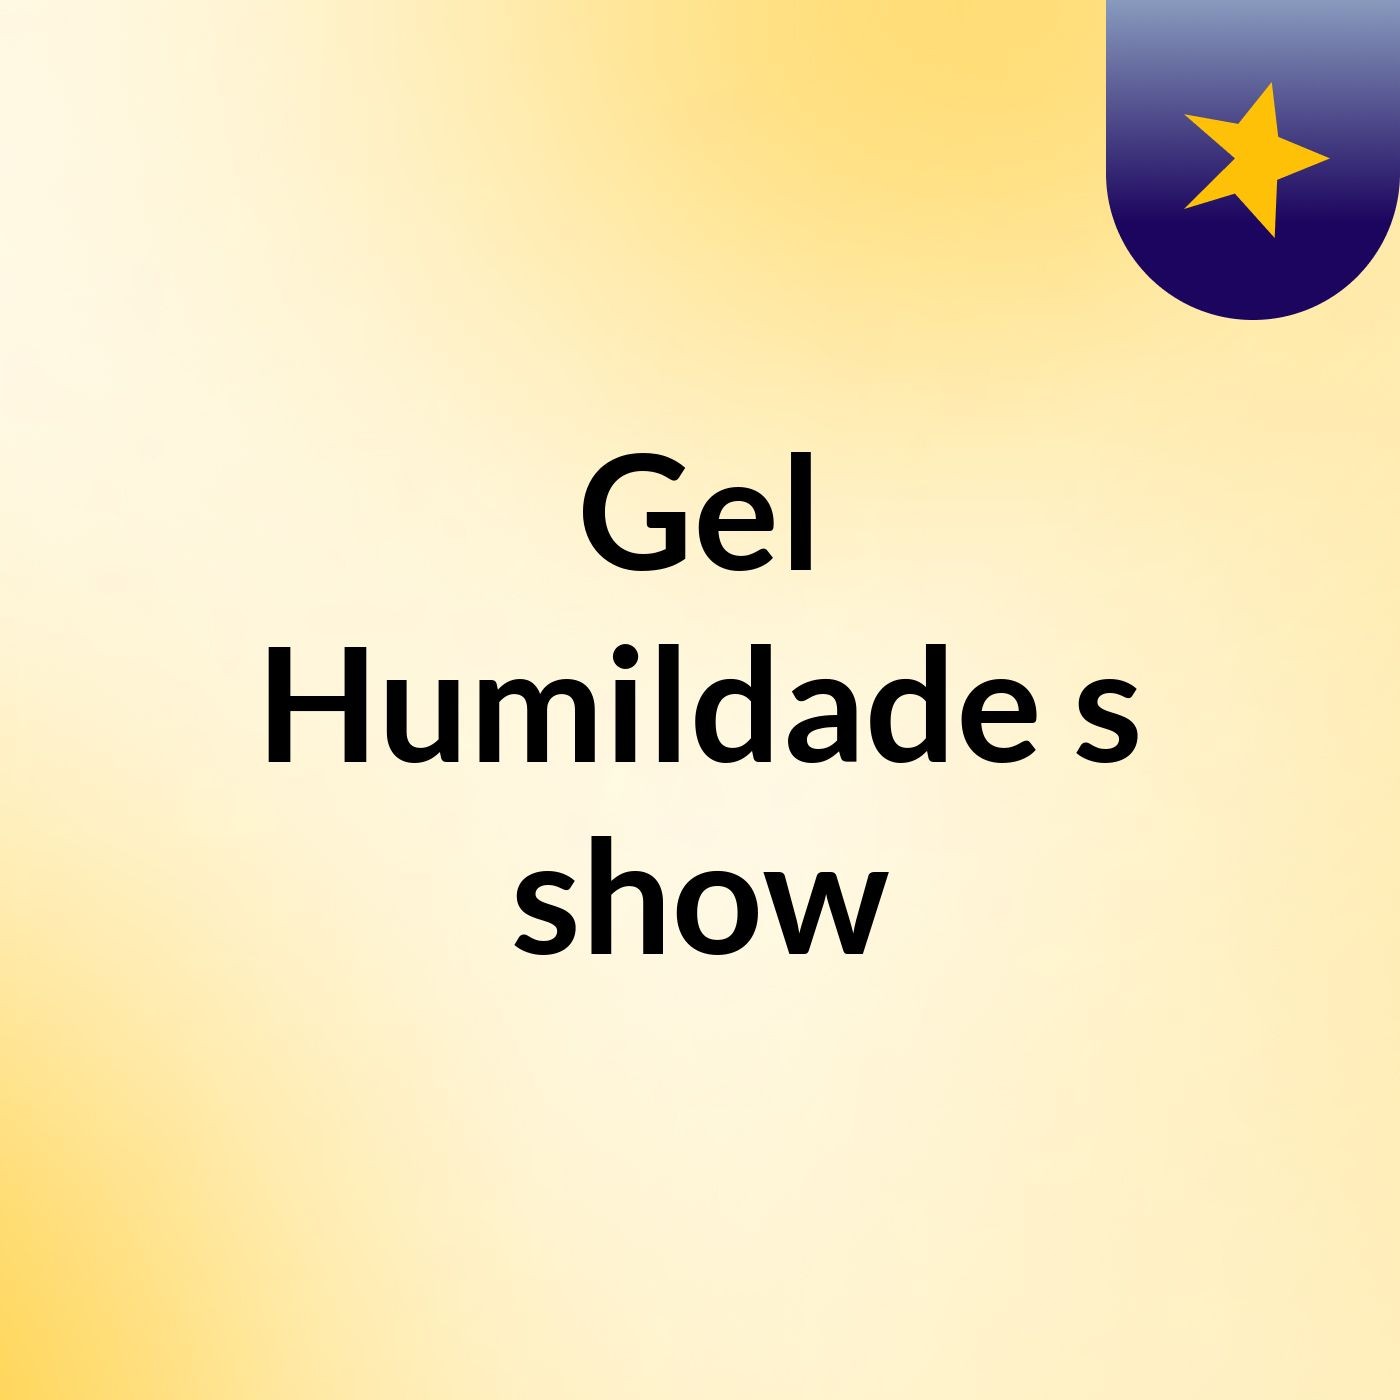 Gel Humildade's show